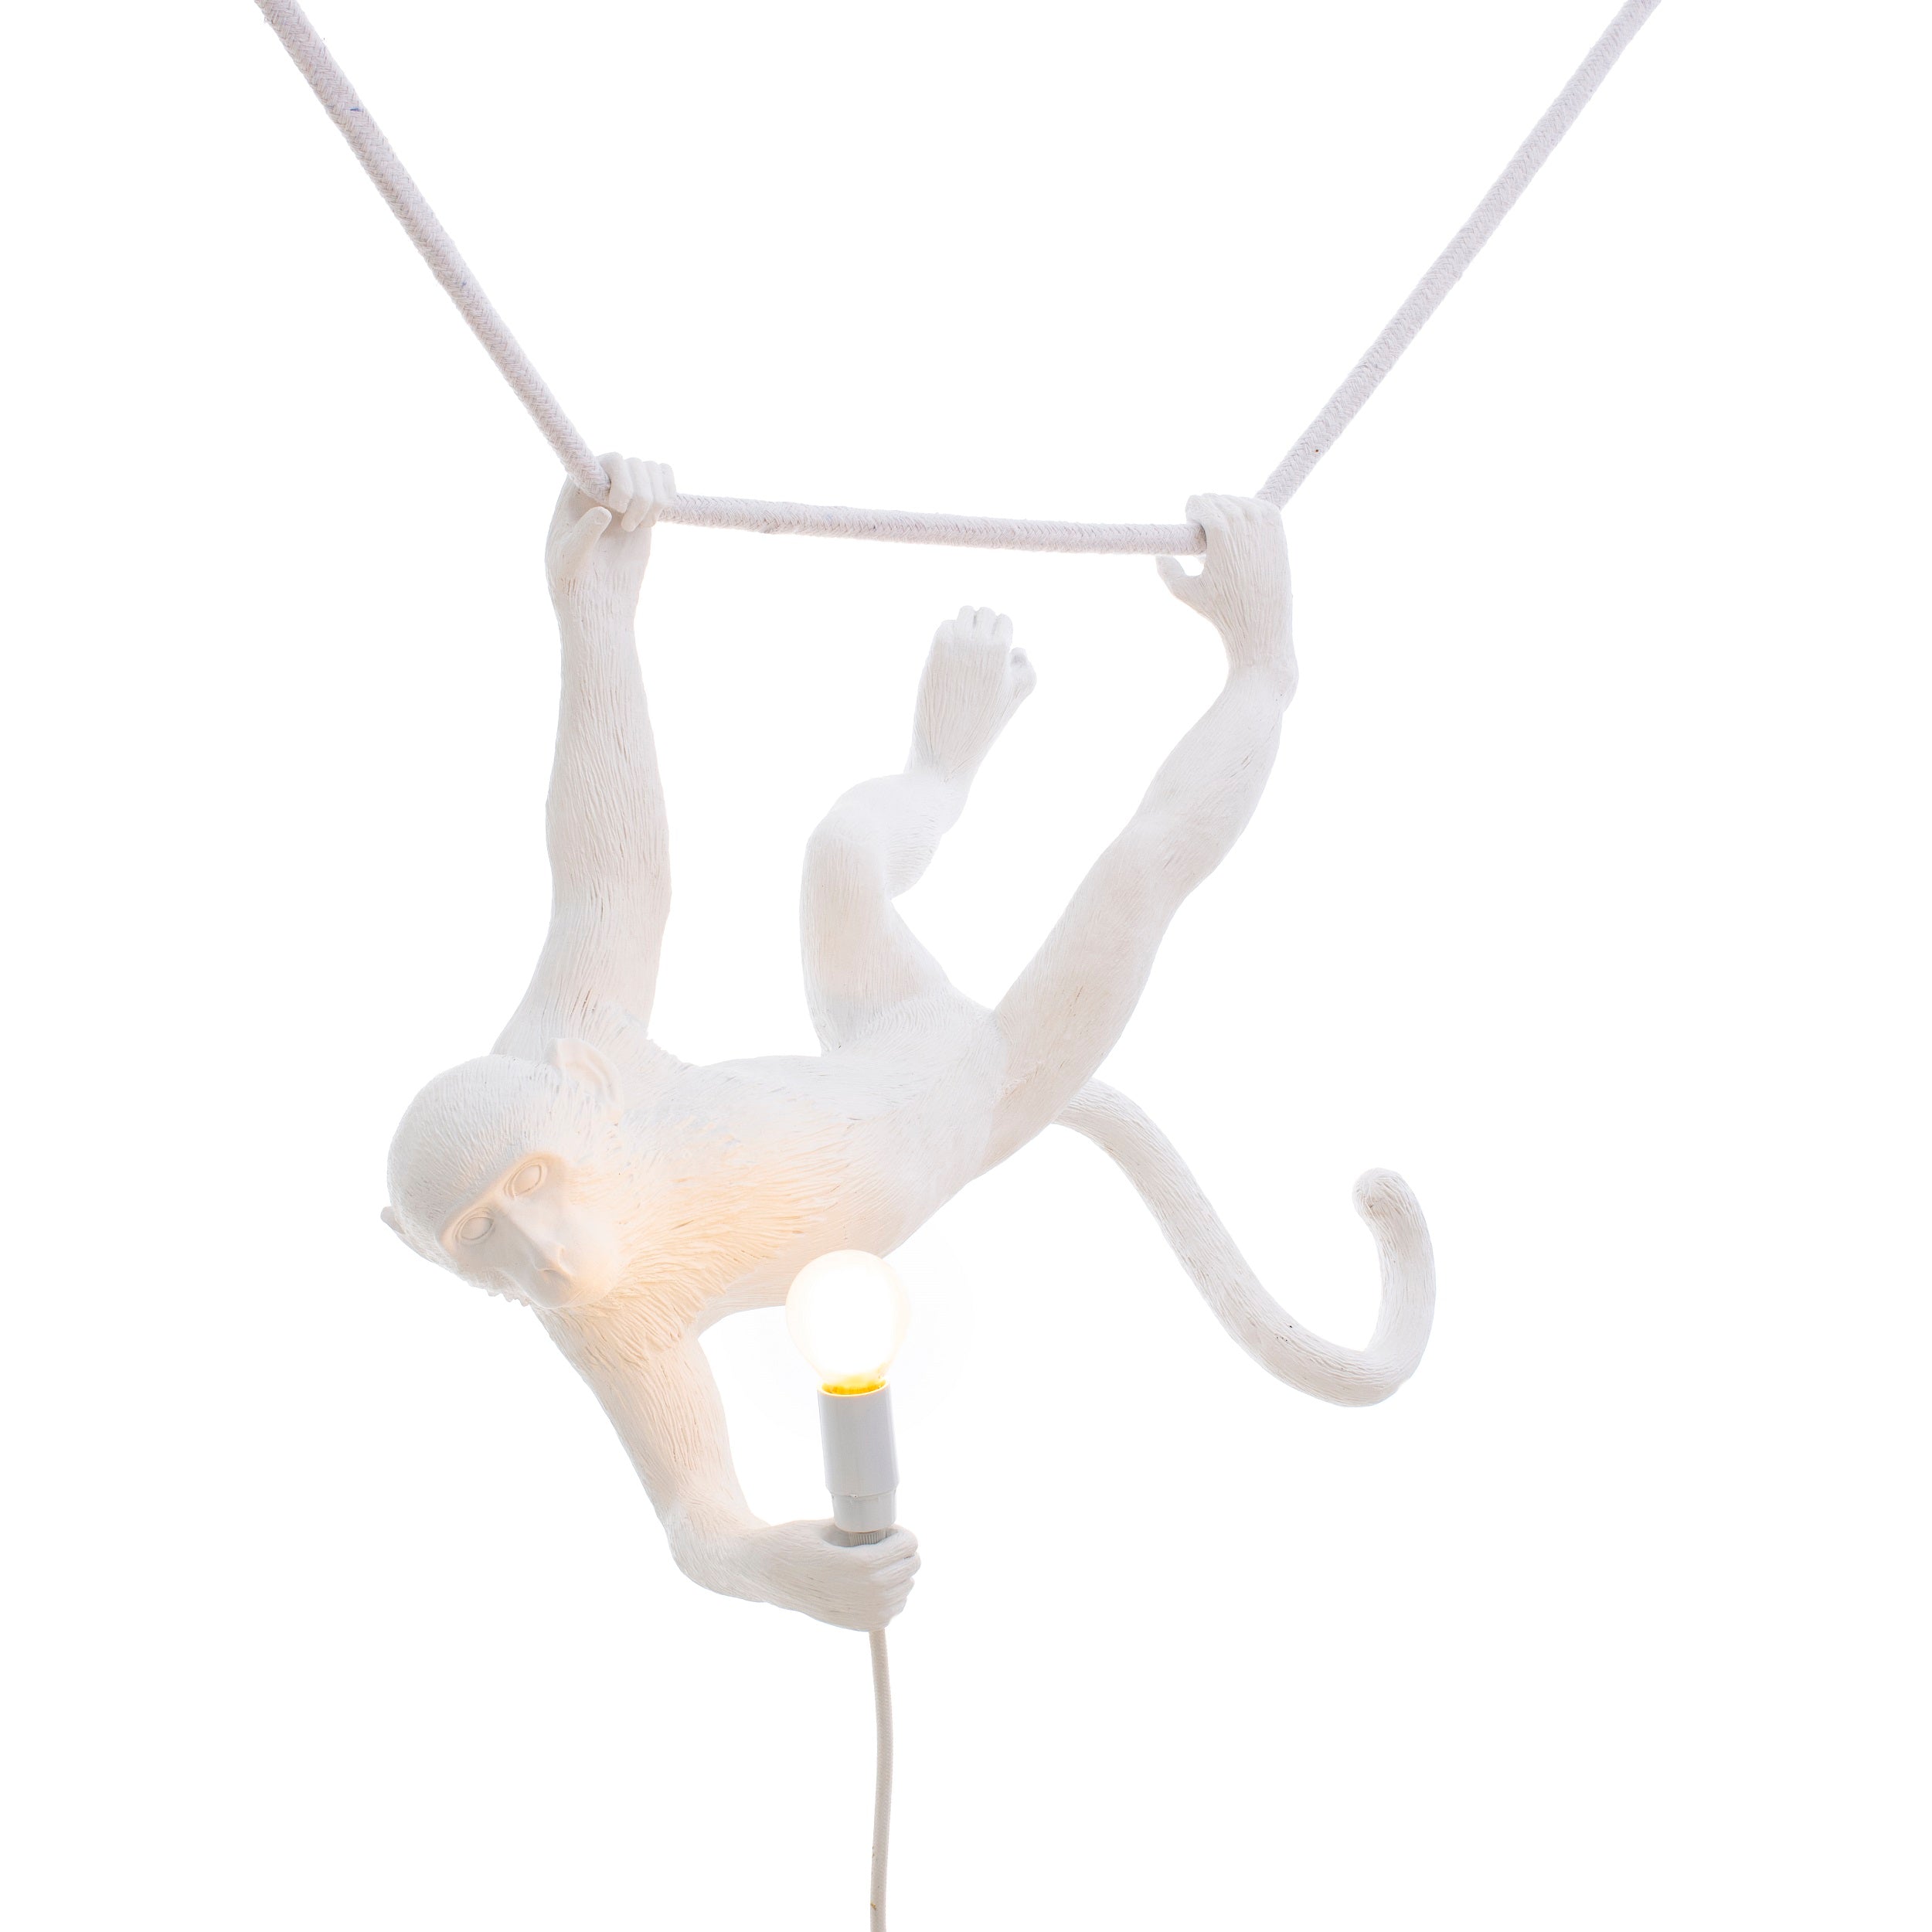 Seletti Monkey Lamp Swing white resin lamp